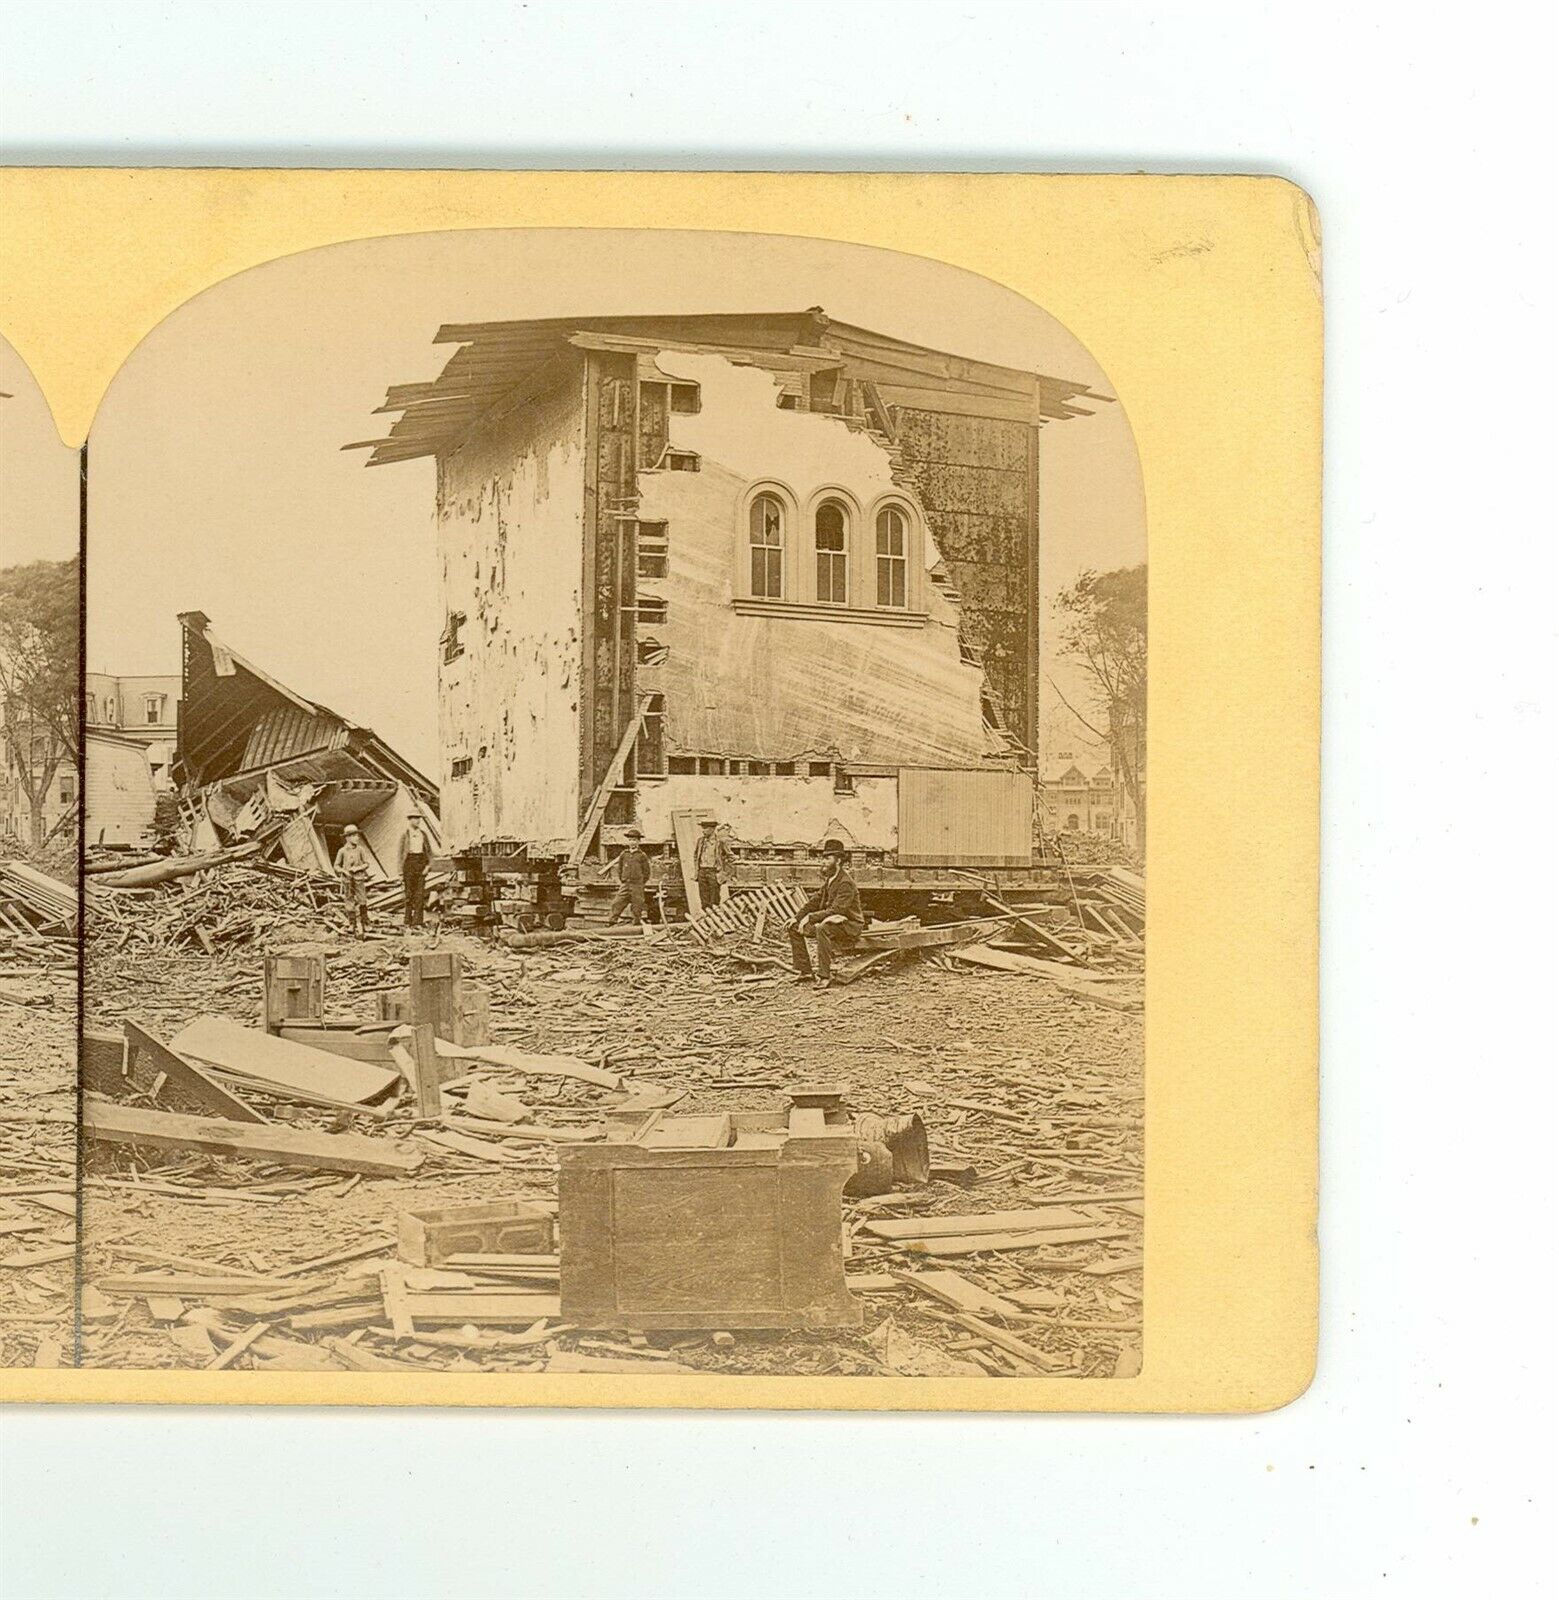 B5971 Bonine 16, Ruined Woodvale Lock-up, Johnstown Flood, May 31, 1889 PA D